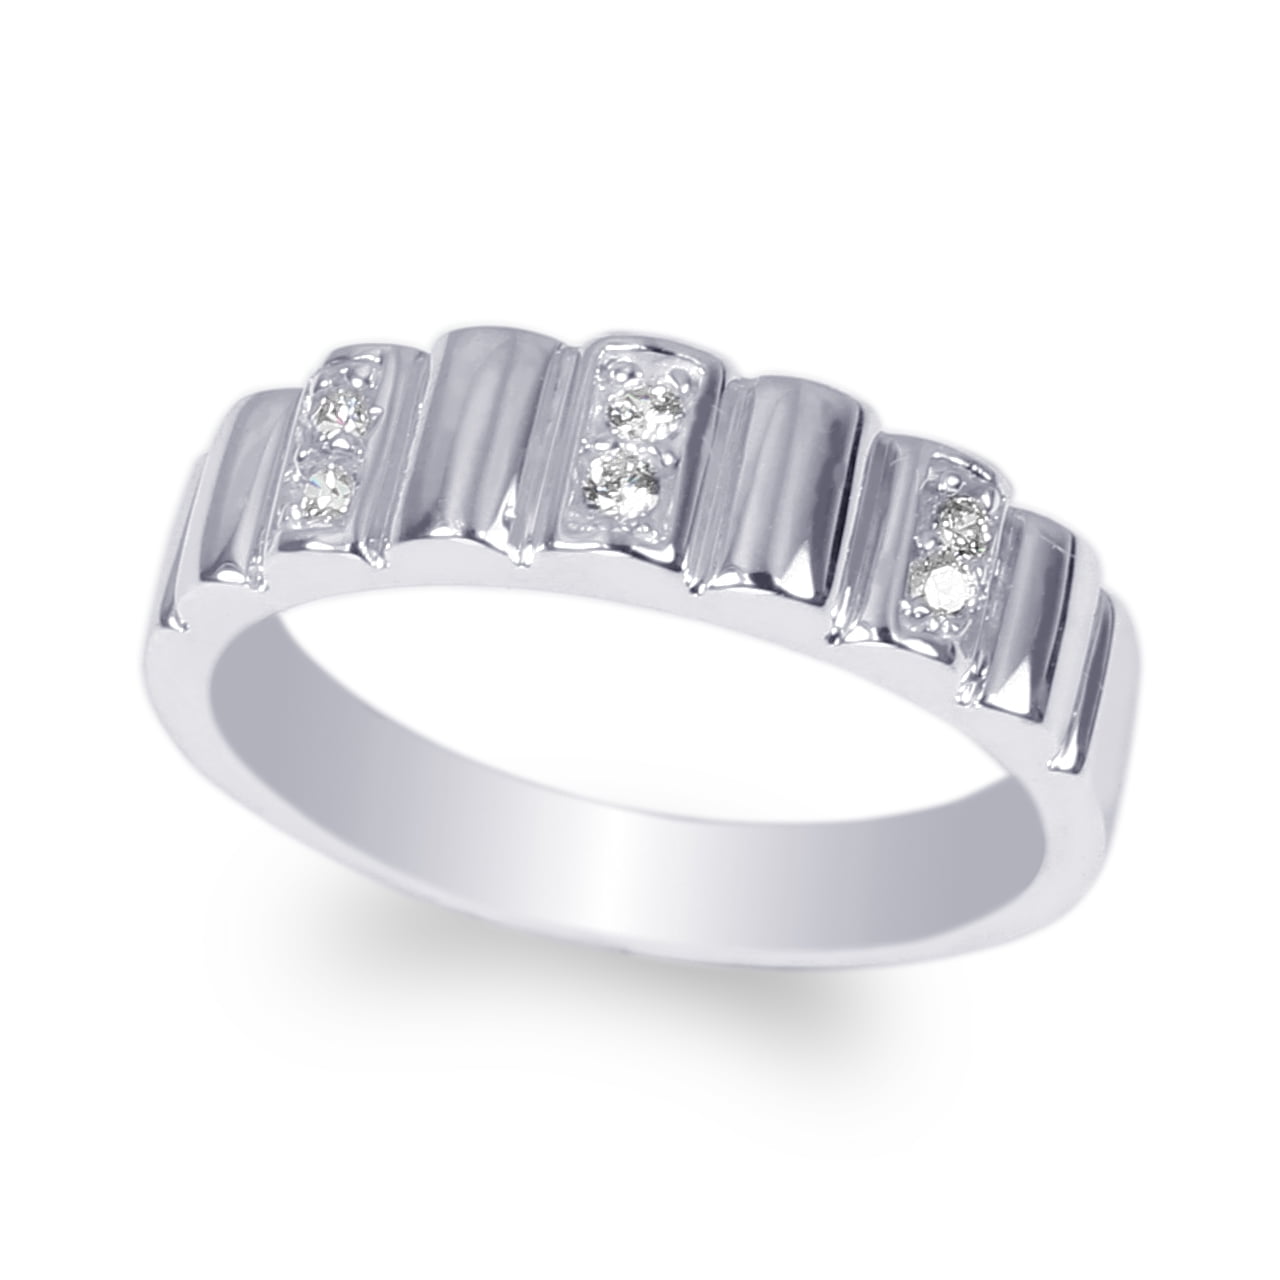 Sterling Silver 925 CZ Pave Round Fashion Eternity Wedding Band Ring Sz 4-10 